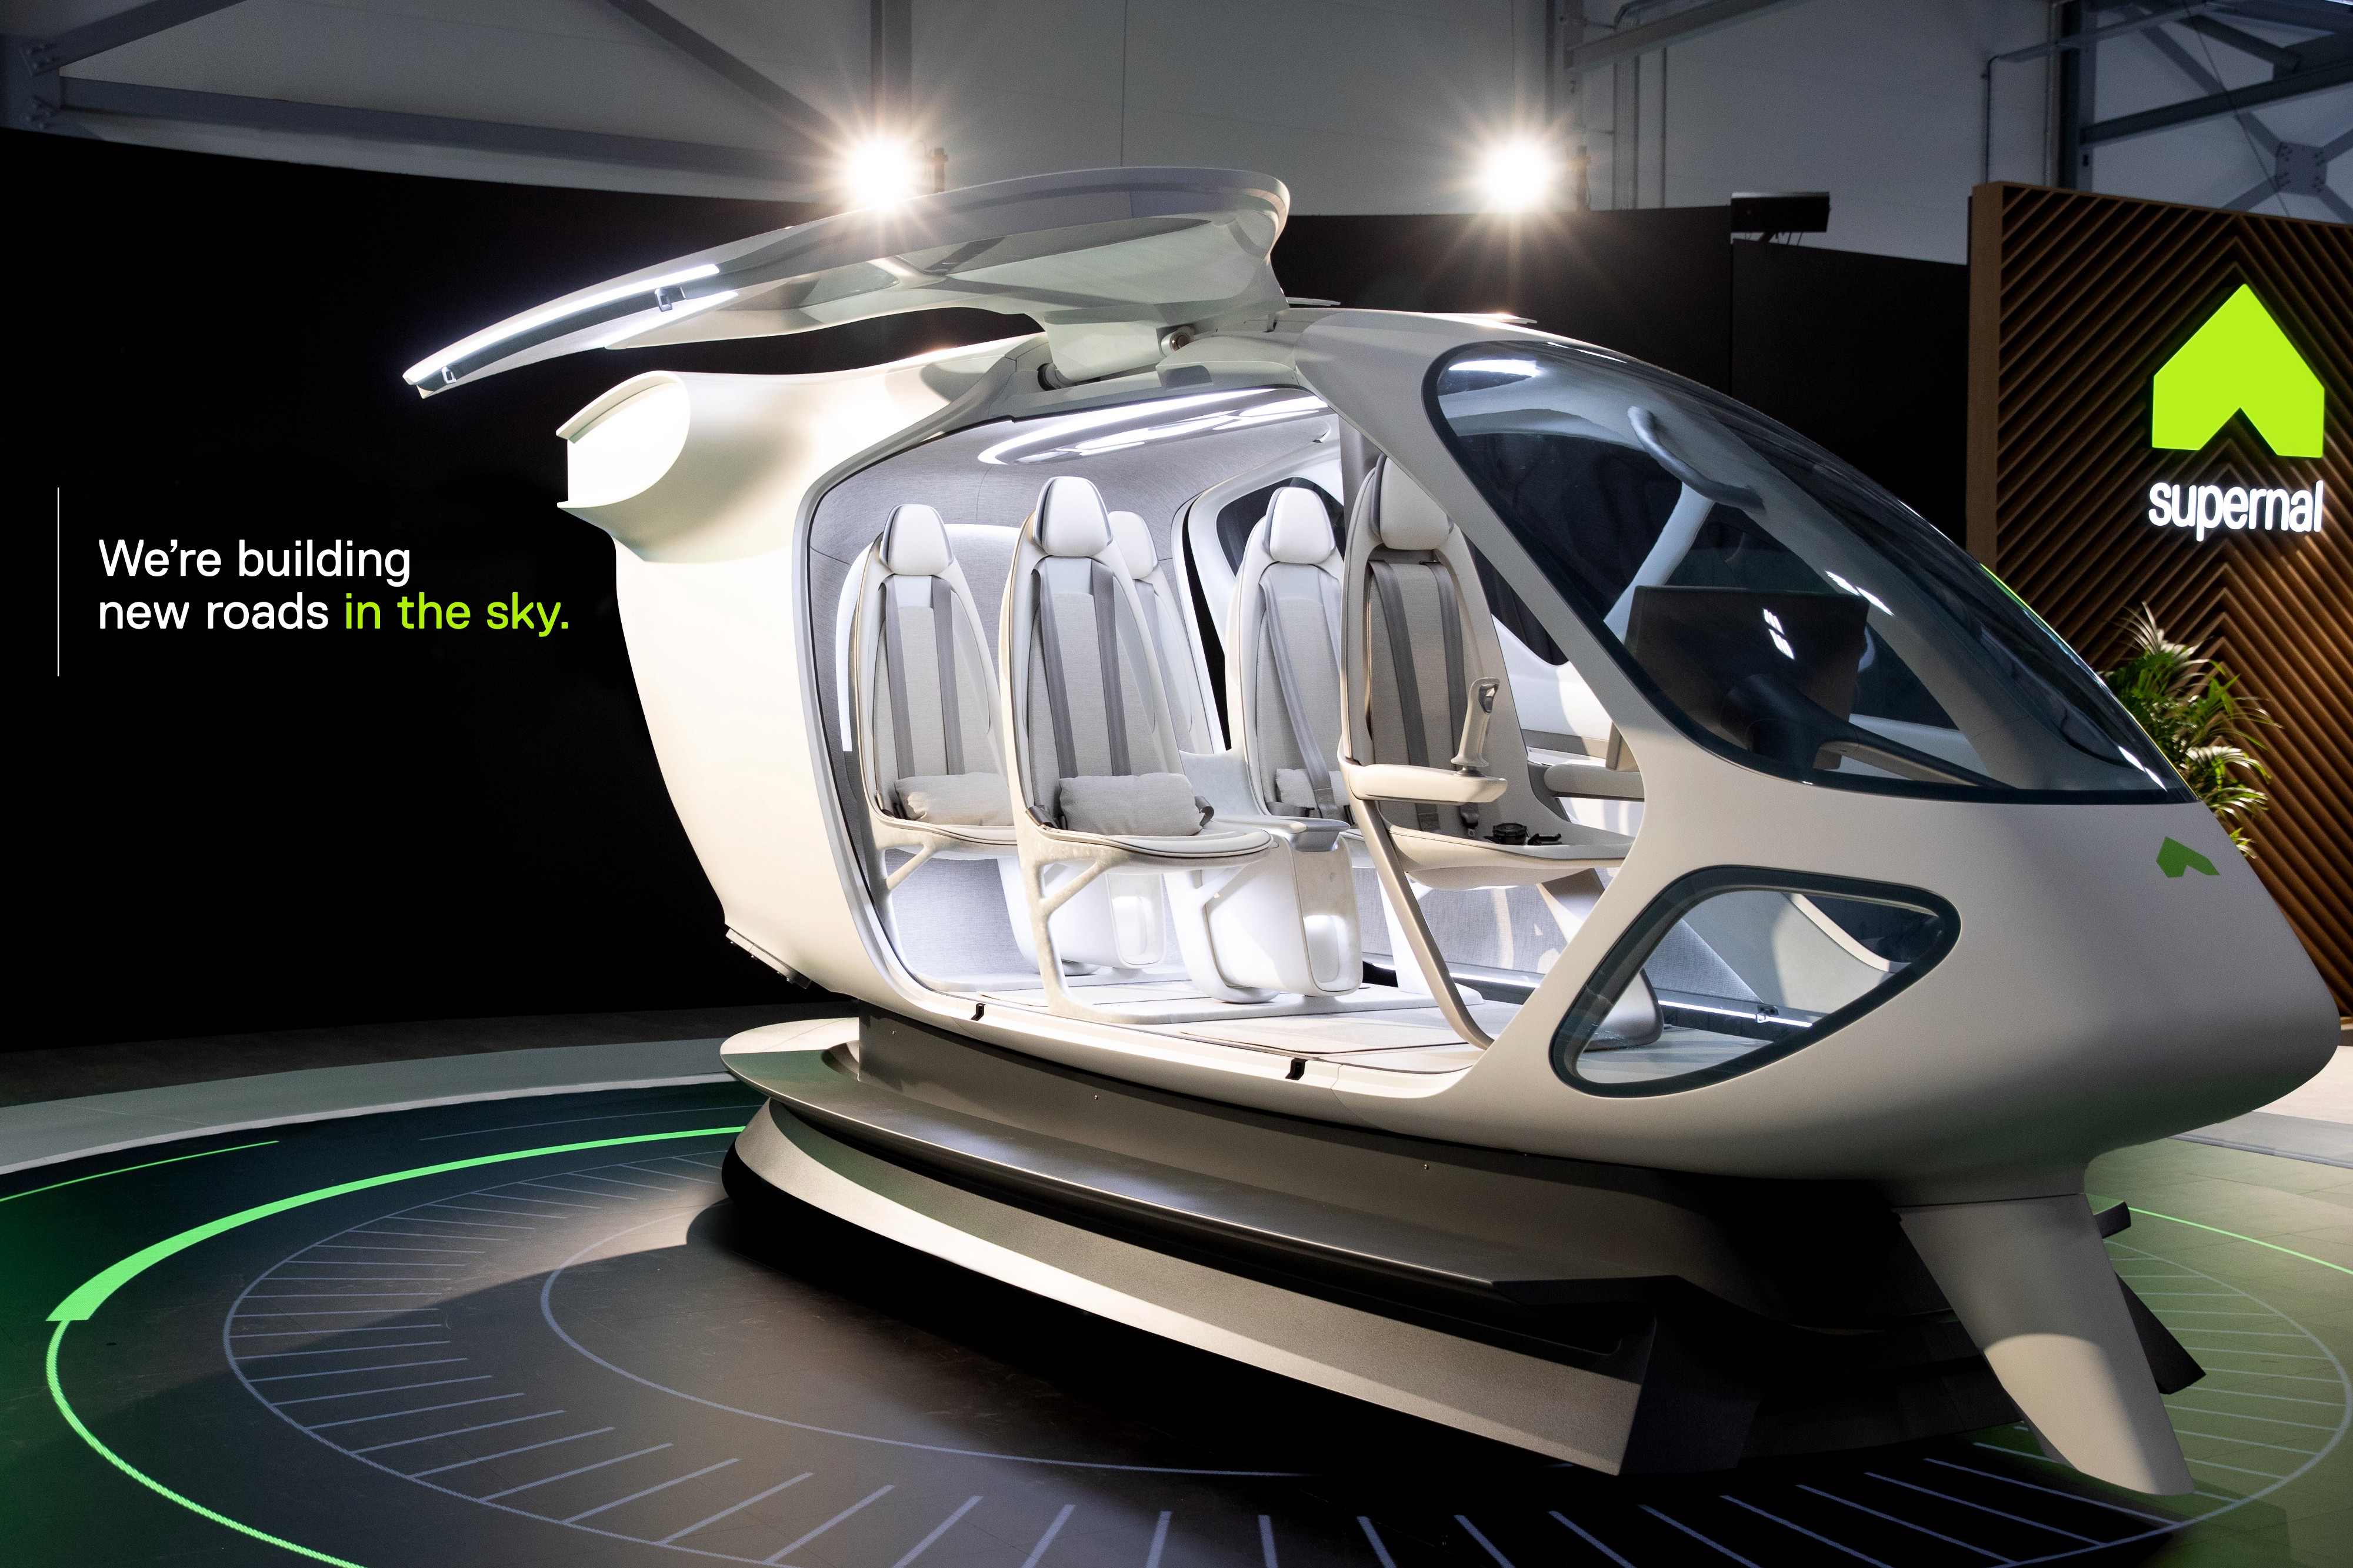 Hyundai and Honeywell to ‘explore avionics integration’ for Supernal